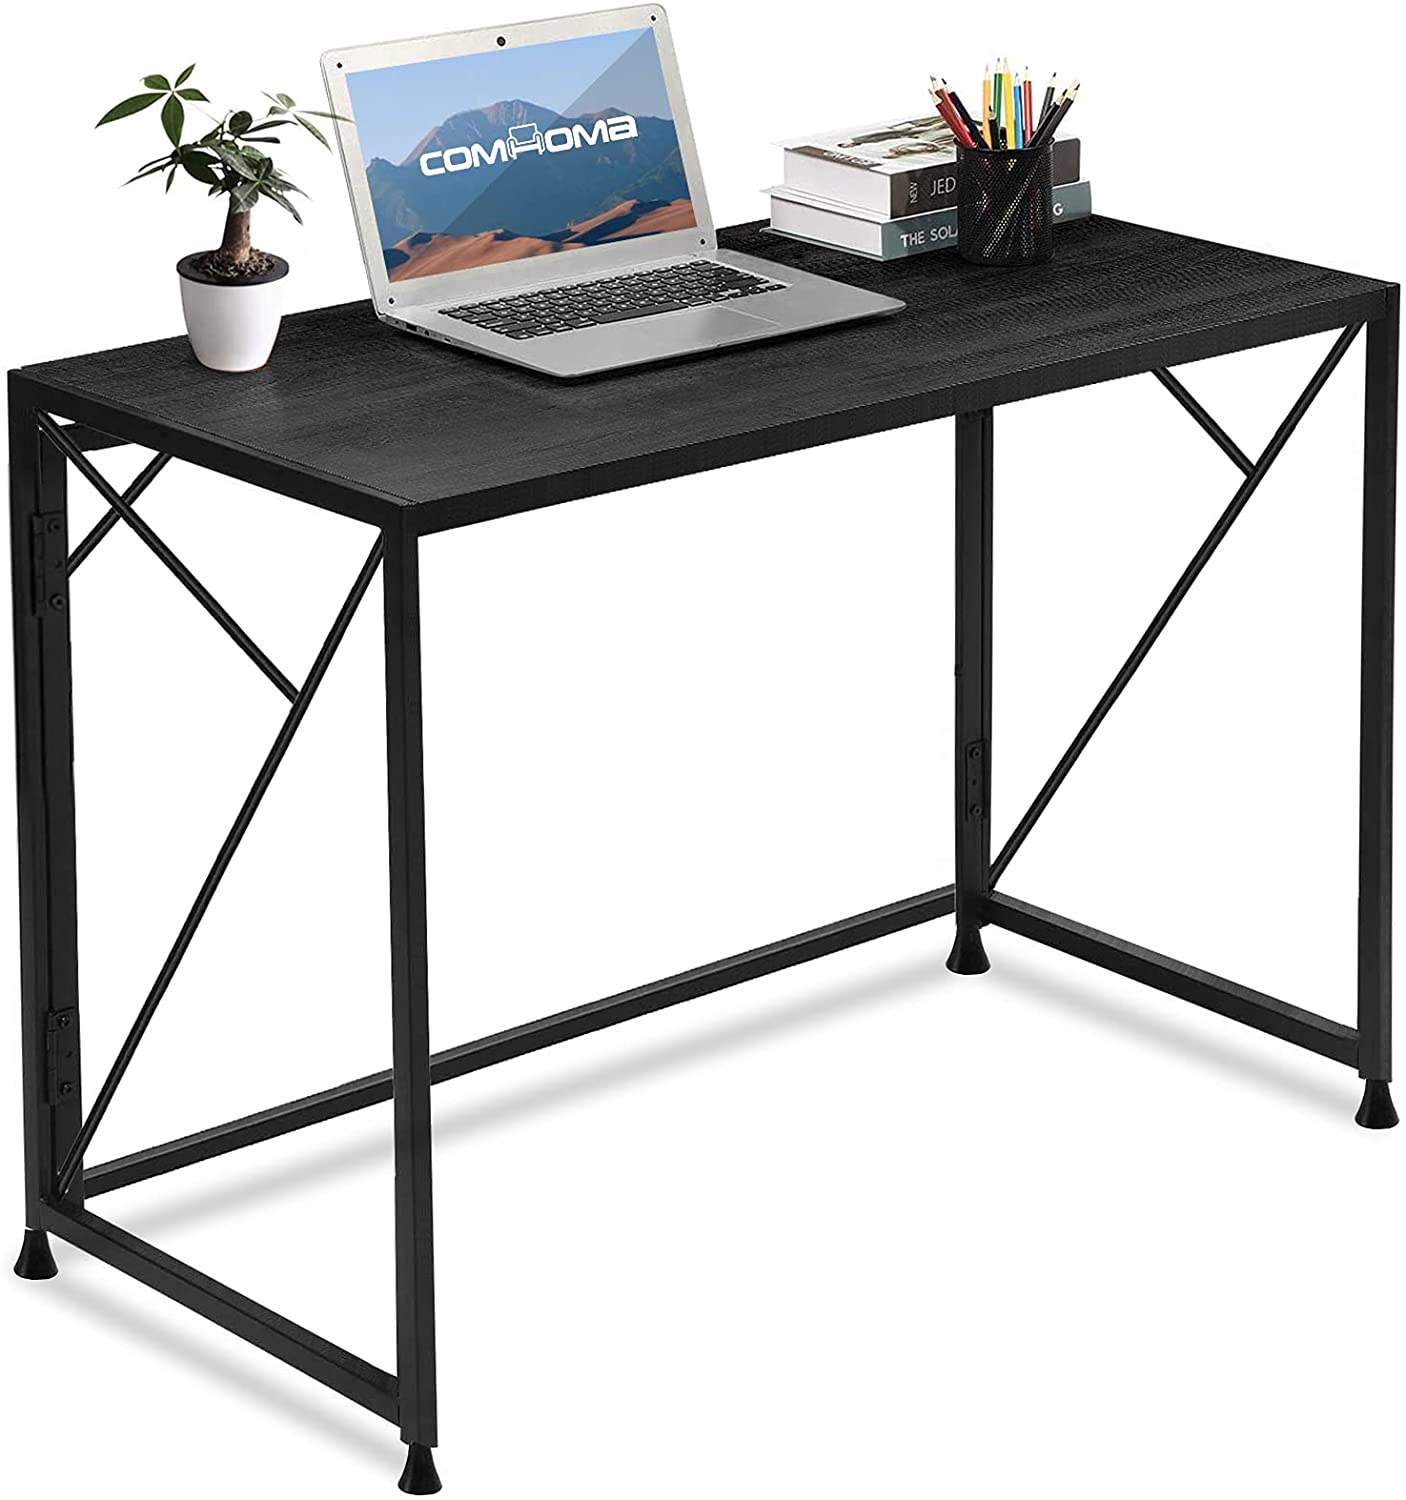 Study Table: Modern Simple Writing Desk Table Space Saving